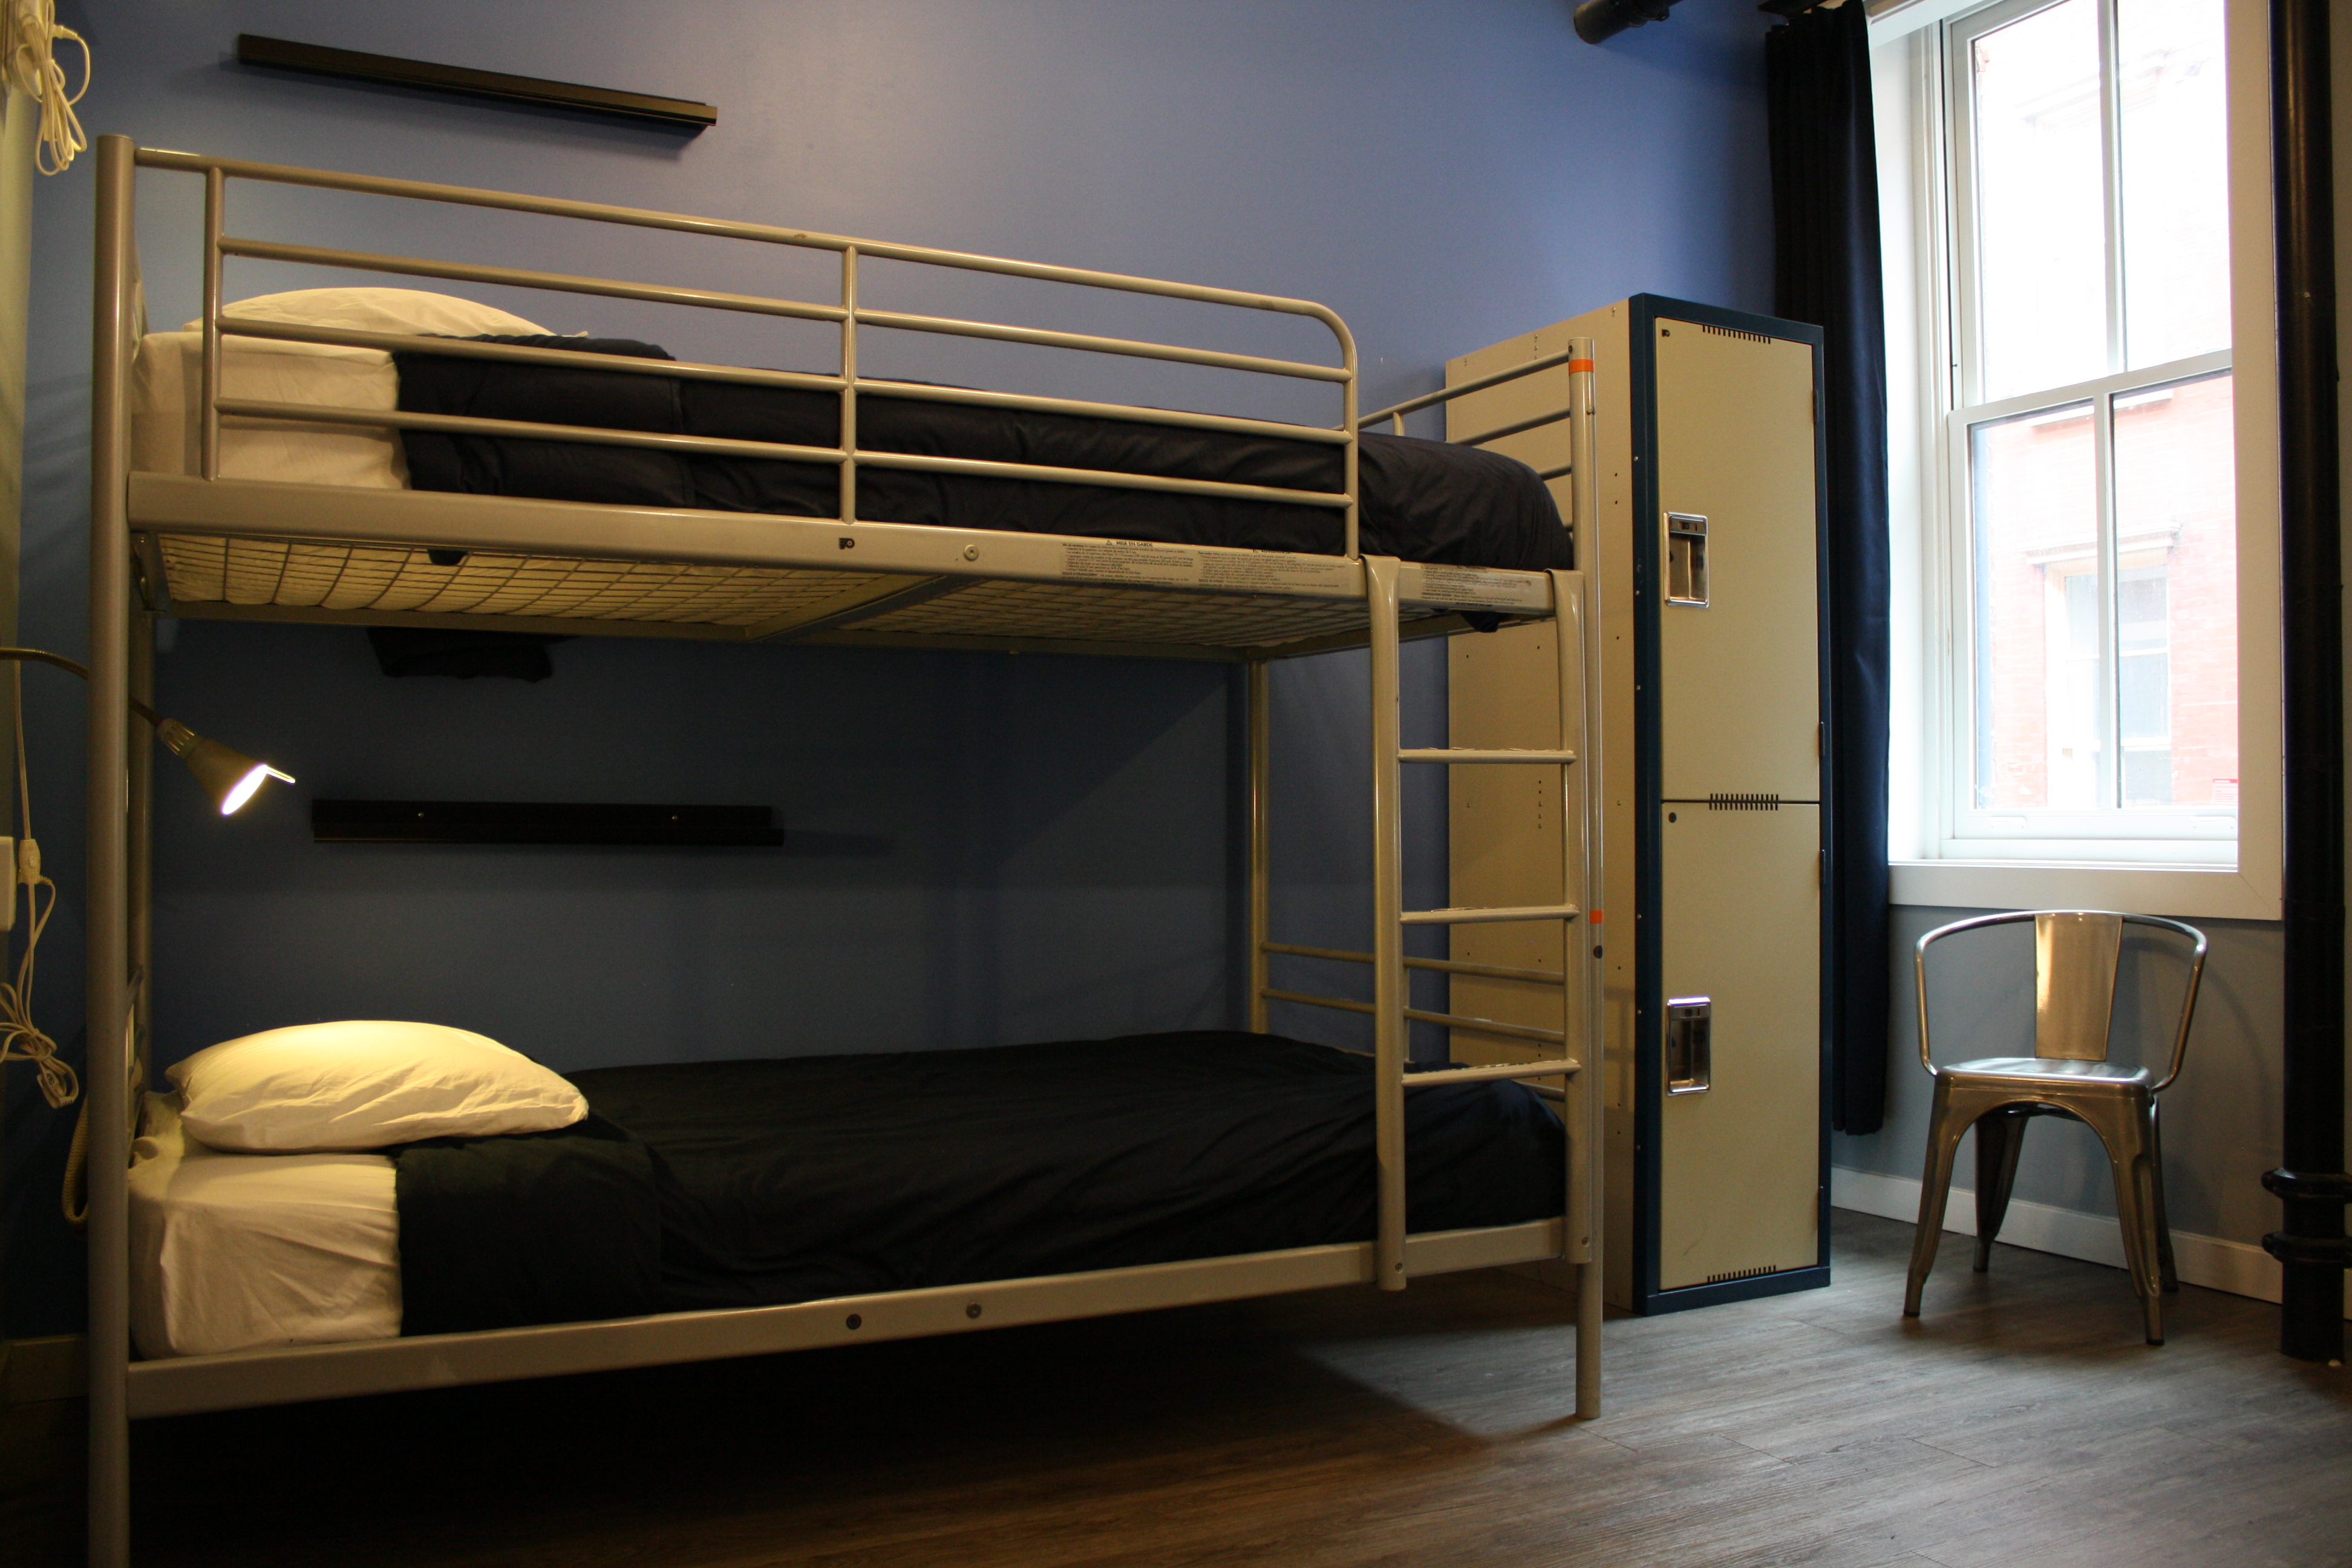 Rooms Rates Apple Hostels, Dorm Room Bunk Beds